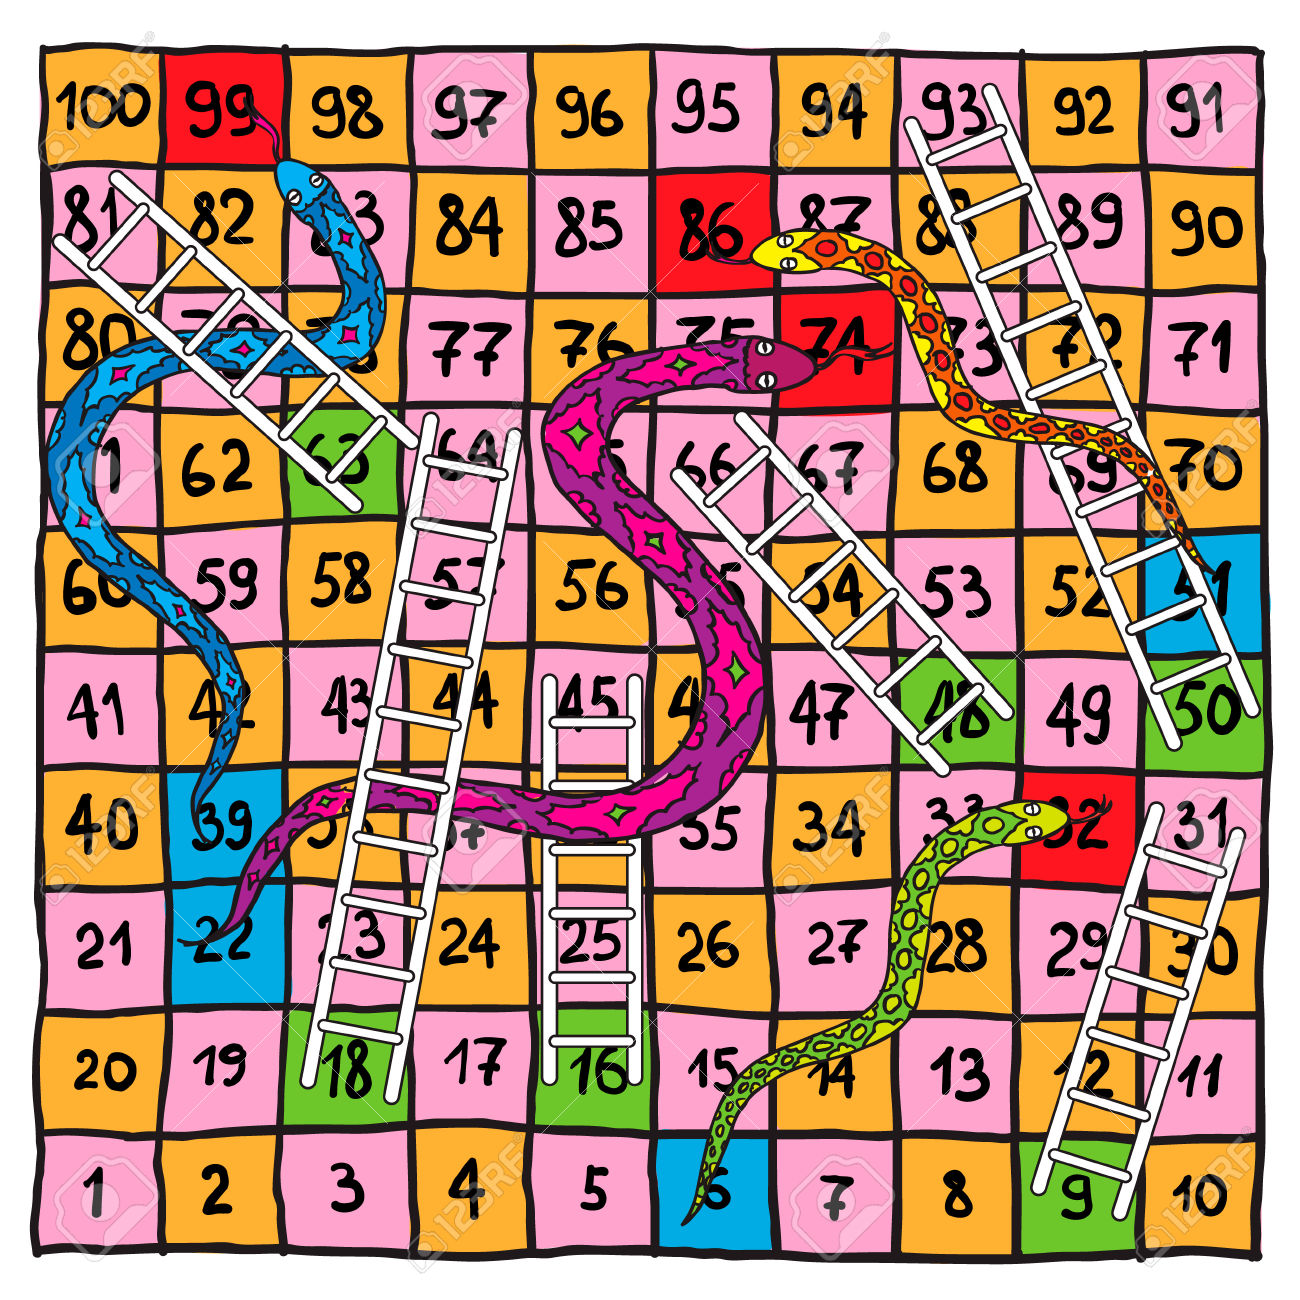 27714698-Snakes-and-Ladders-Board-Game-Stock-Vector-snake.jpg